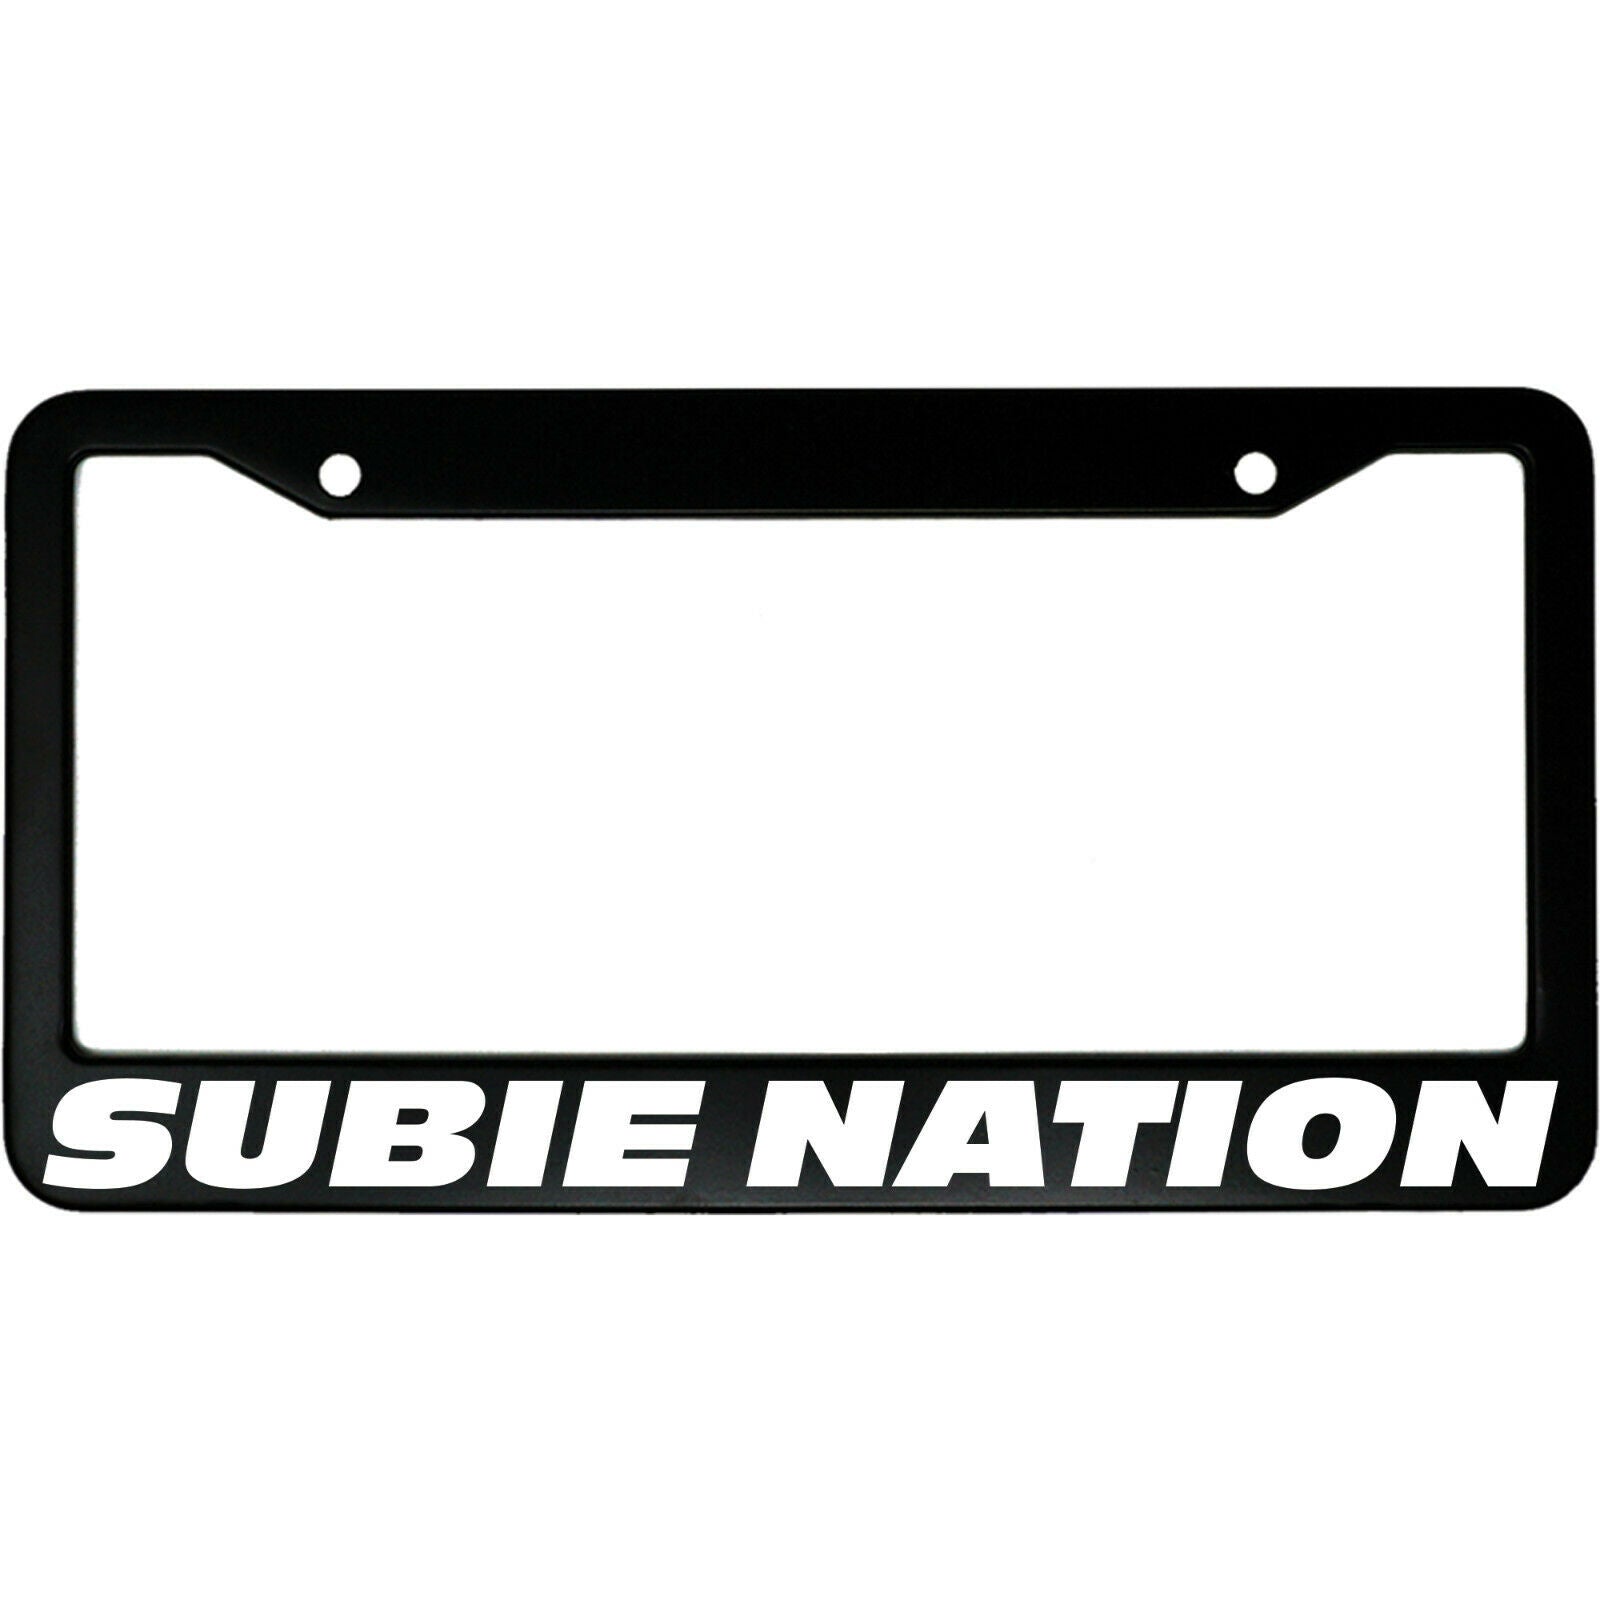 Subie Nation